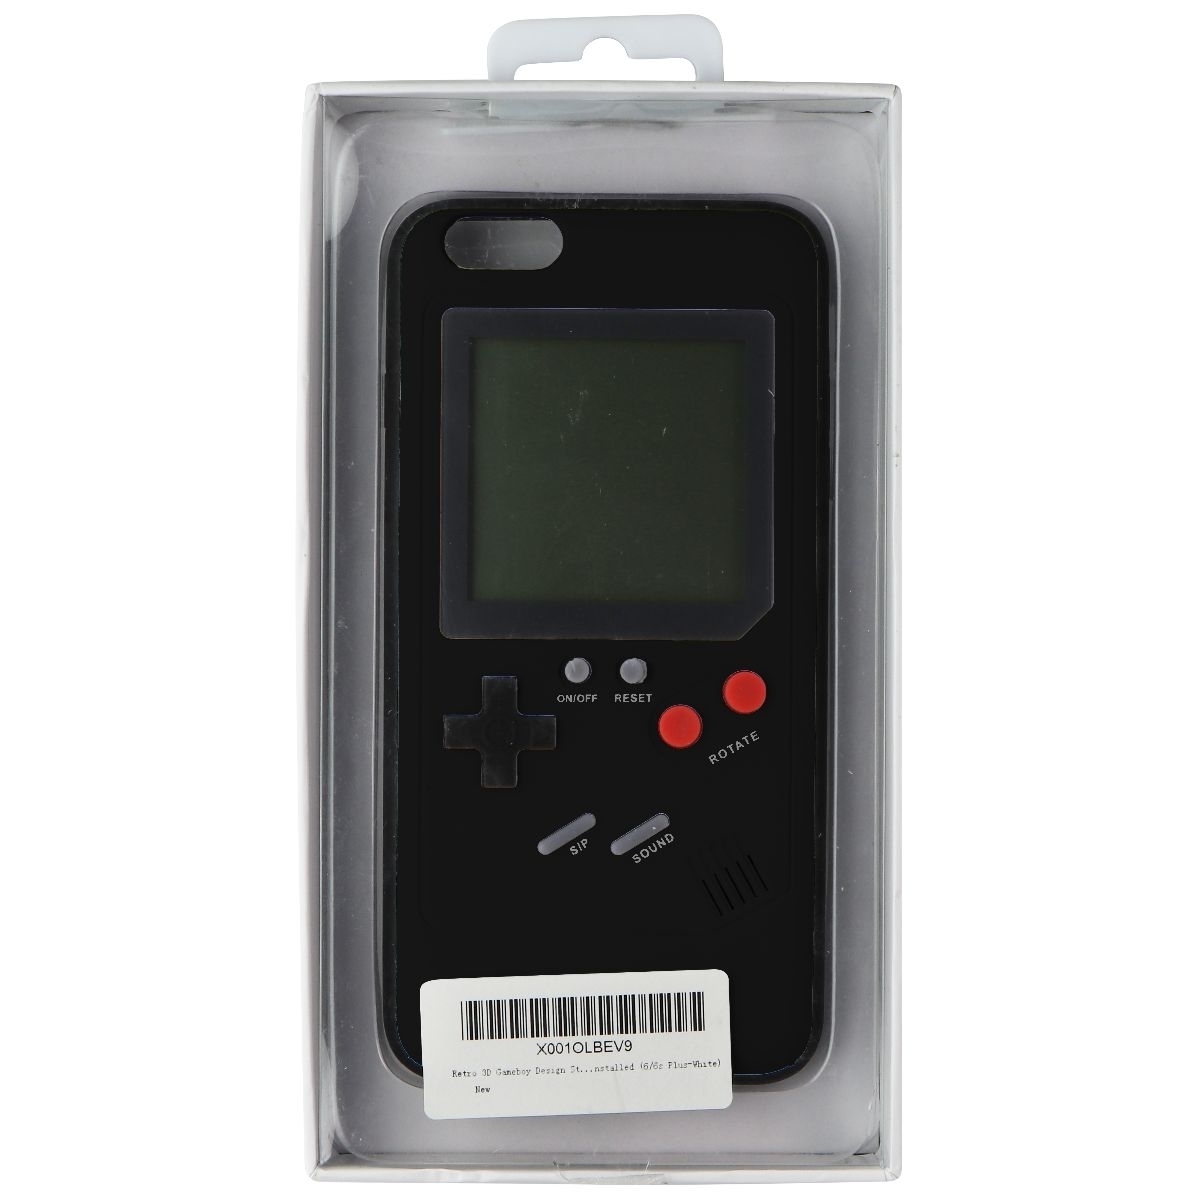 Retro 3D Gameboy Design Case For IPhone 6s+ / 6+ (PLUS) - Black (Refurbished)